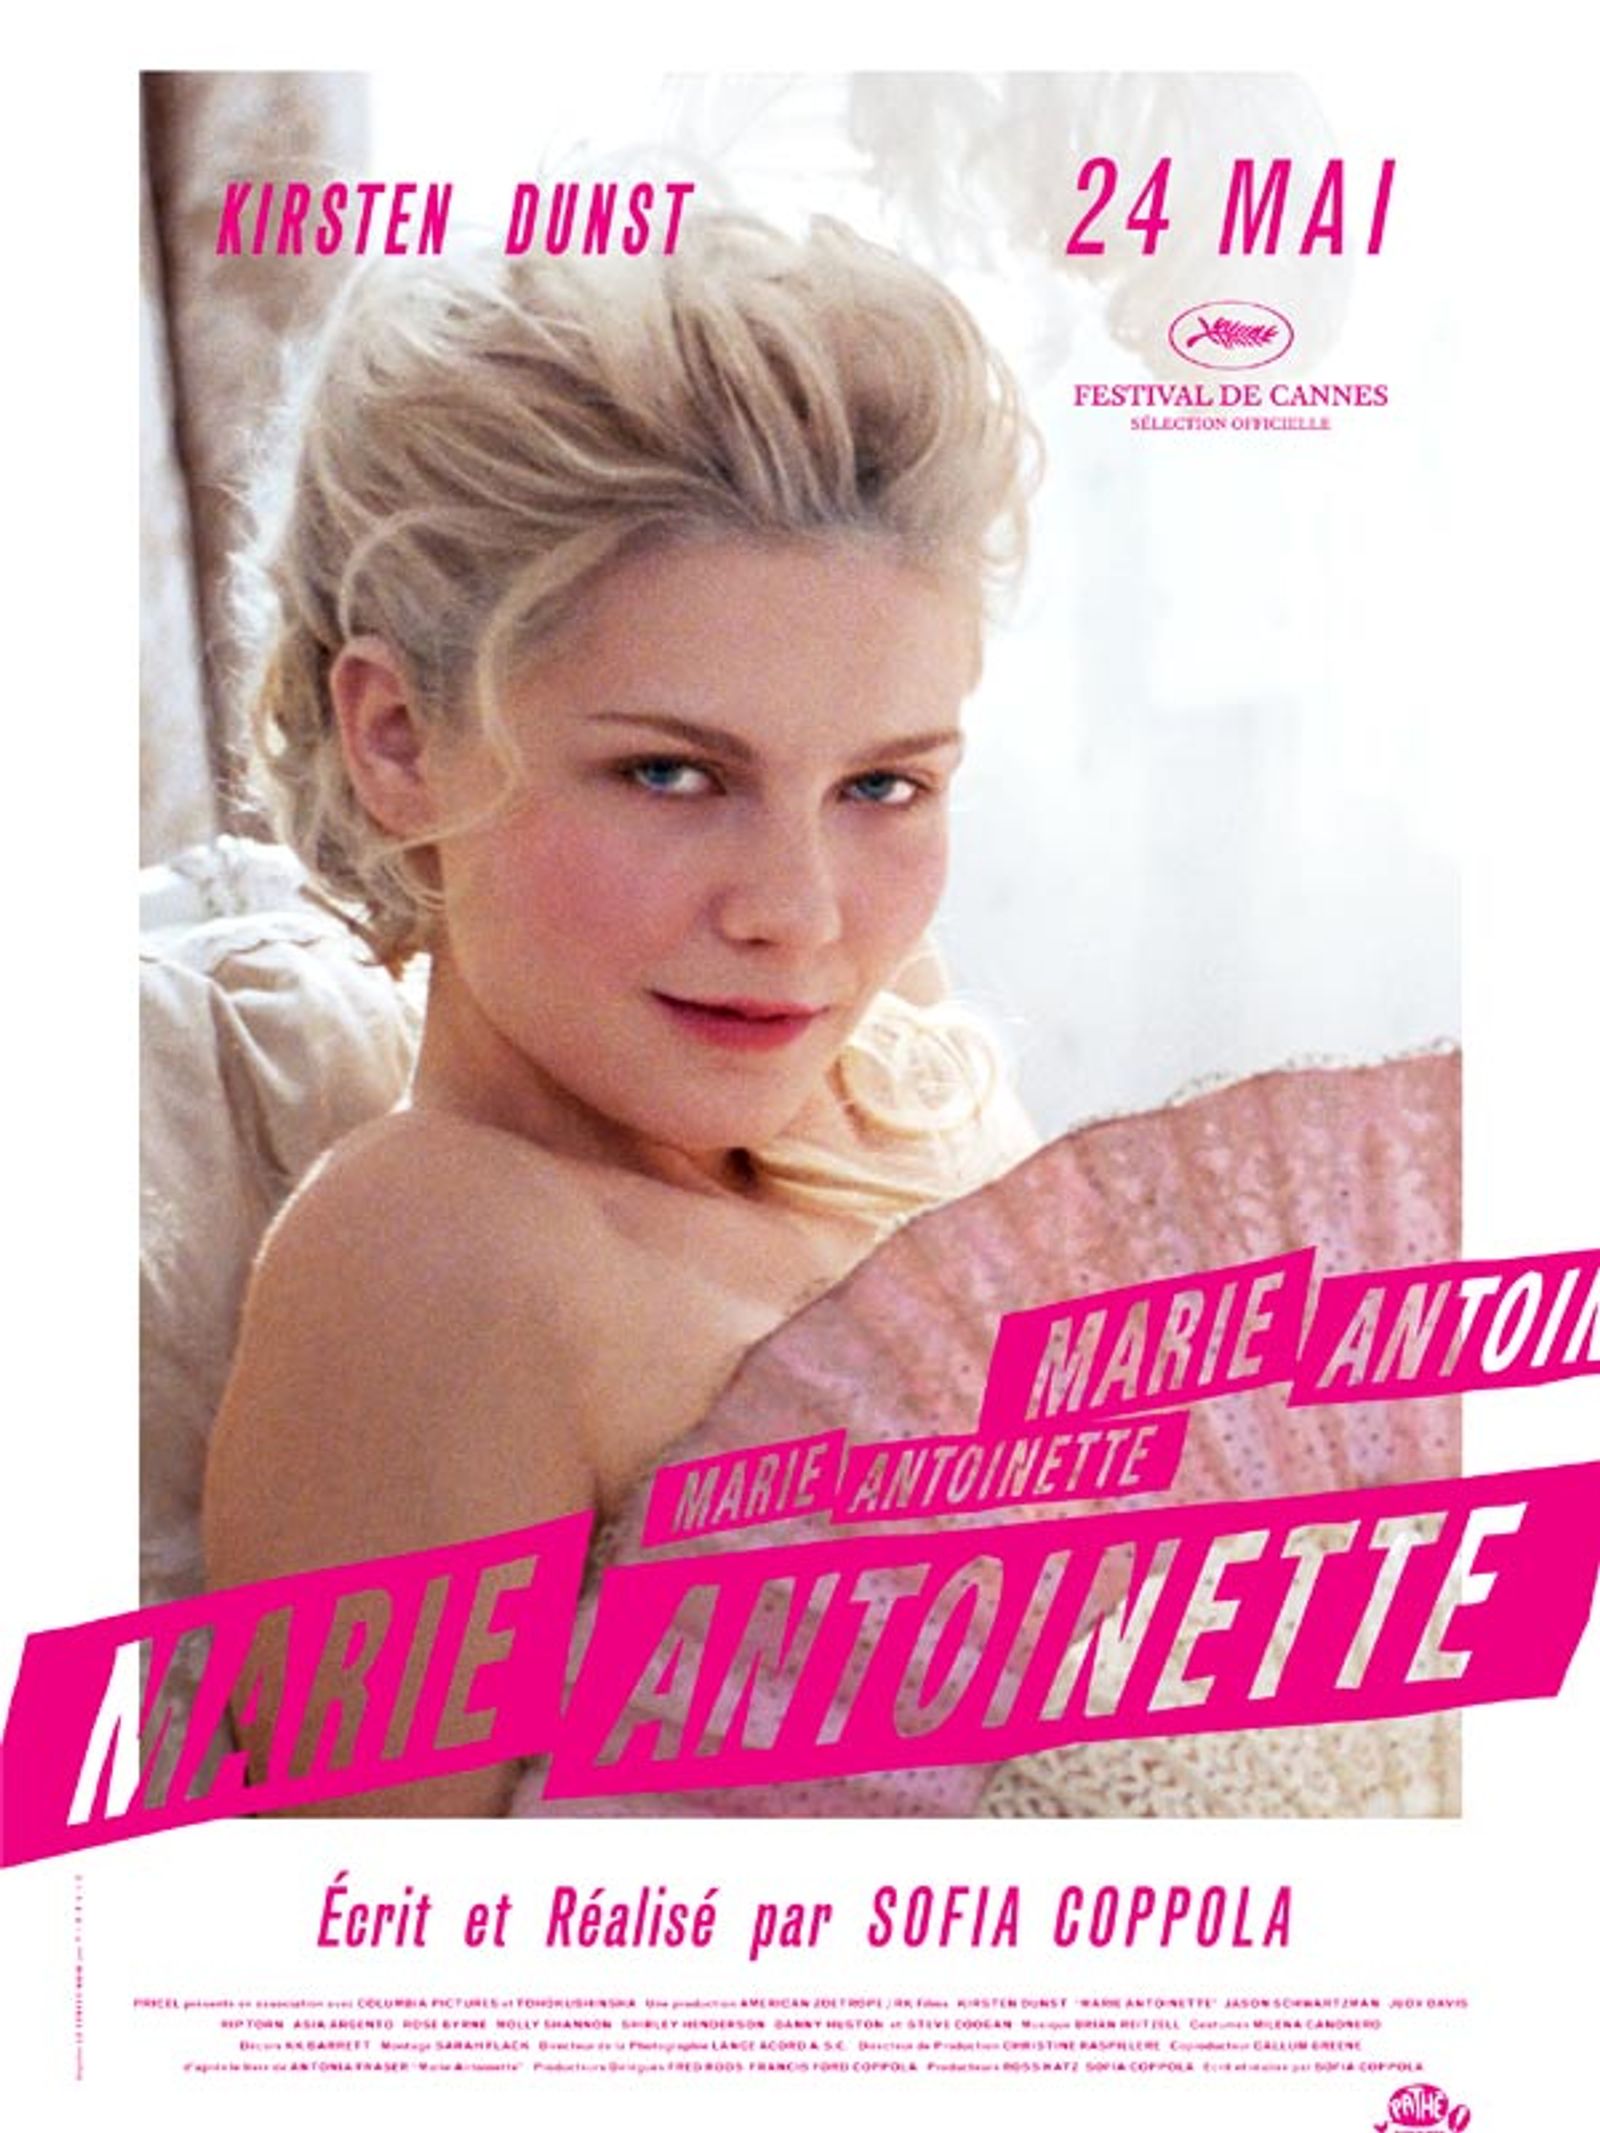 MARIE ANTOINETTE - Festival de Cannes